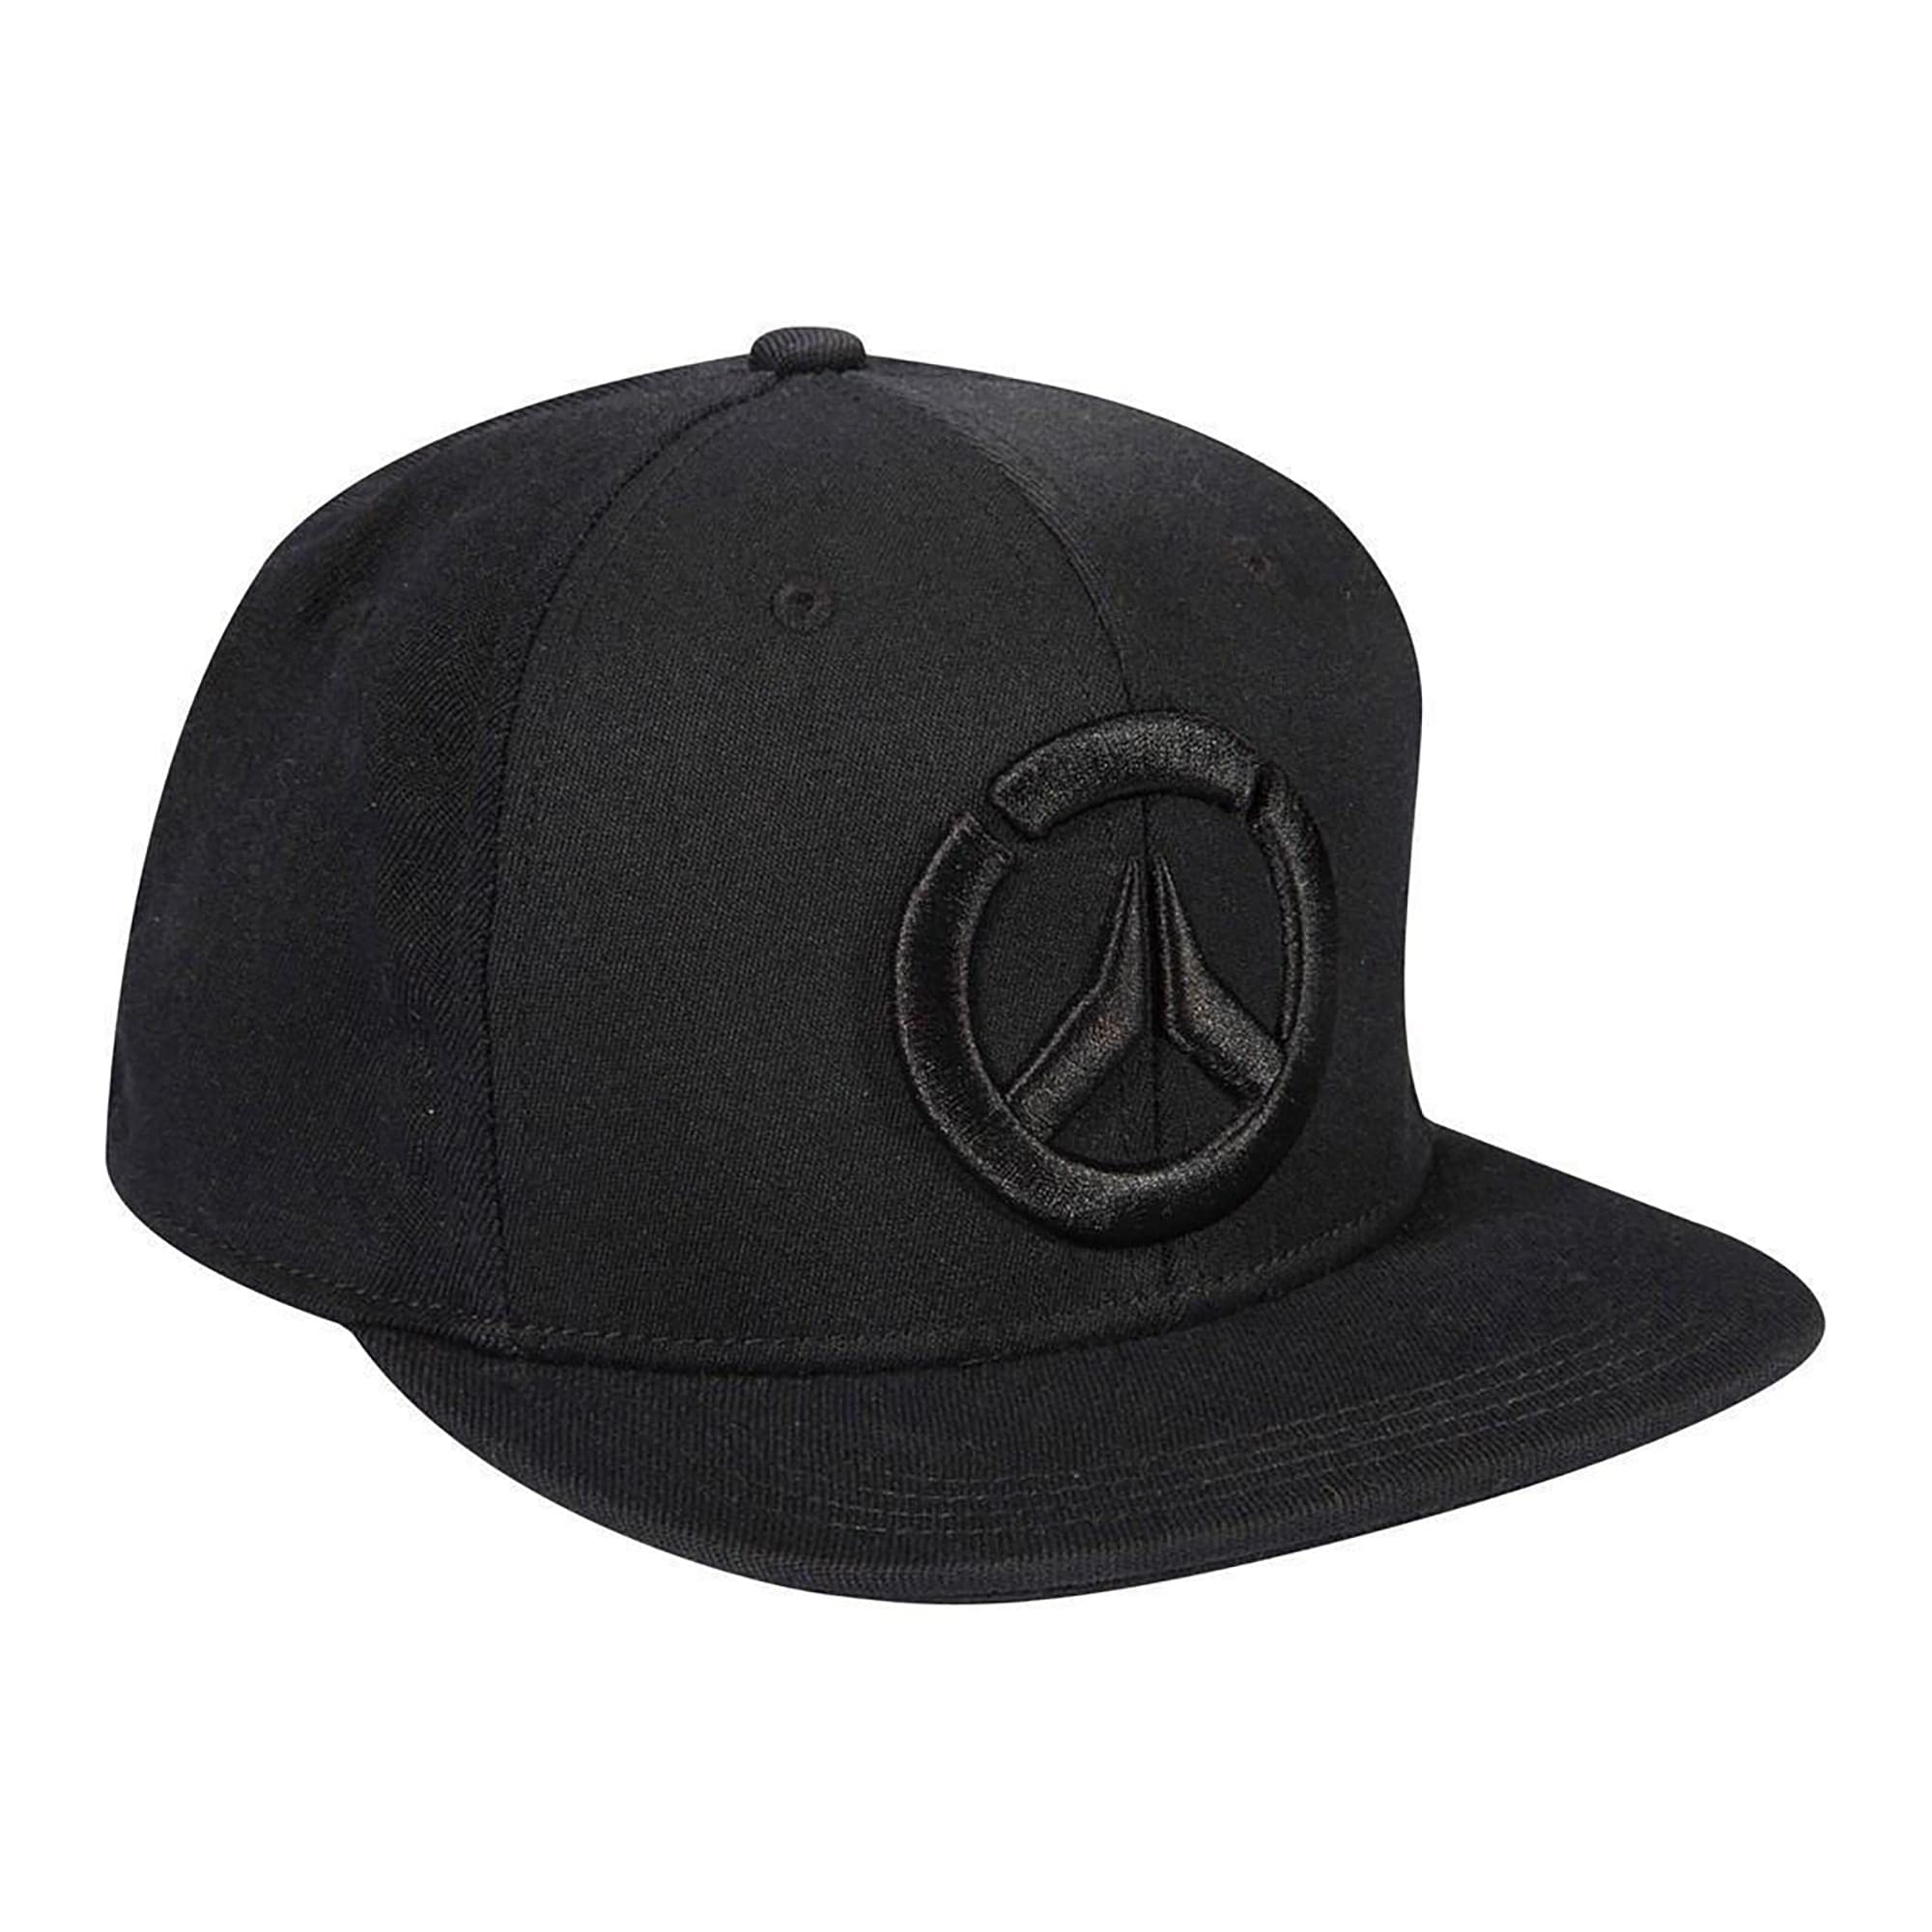 JINX Overwatch Blackout Snapback Baseball Hat All Black Adult Adjustable Sizing